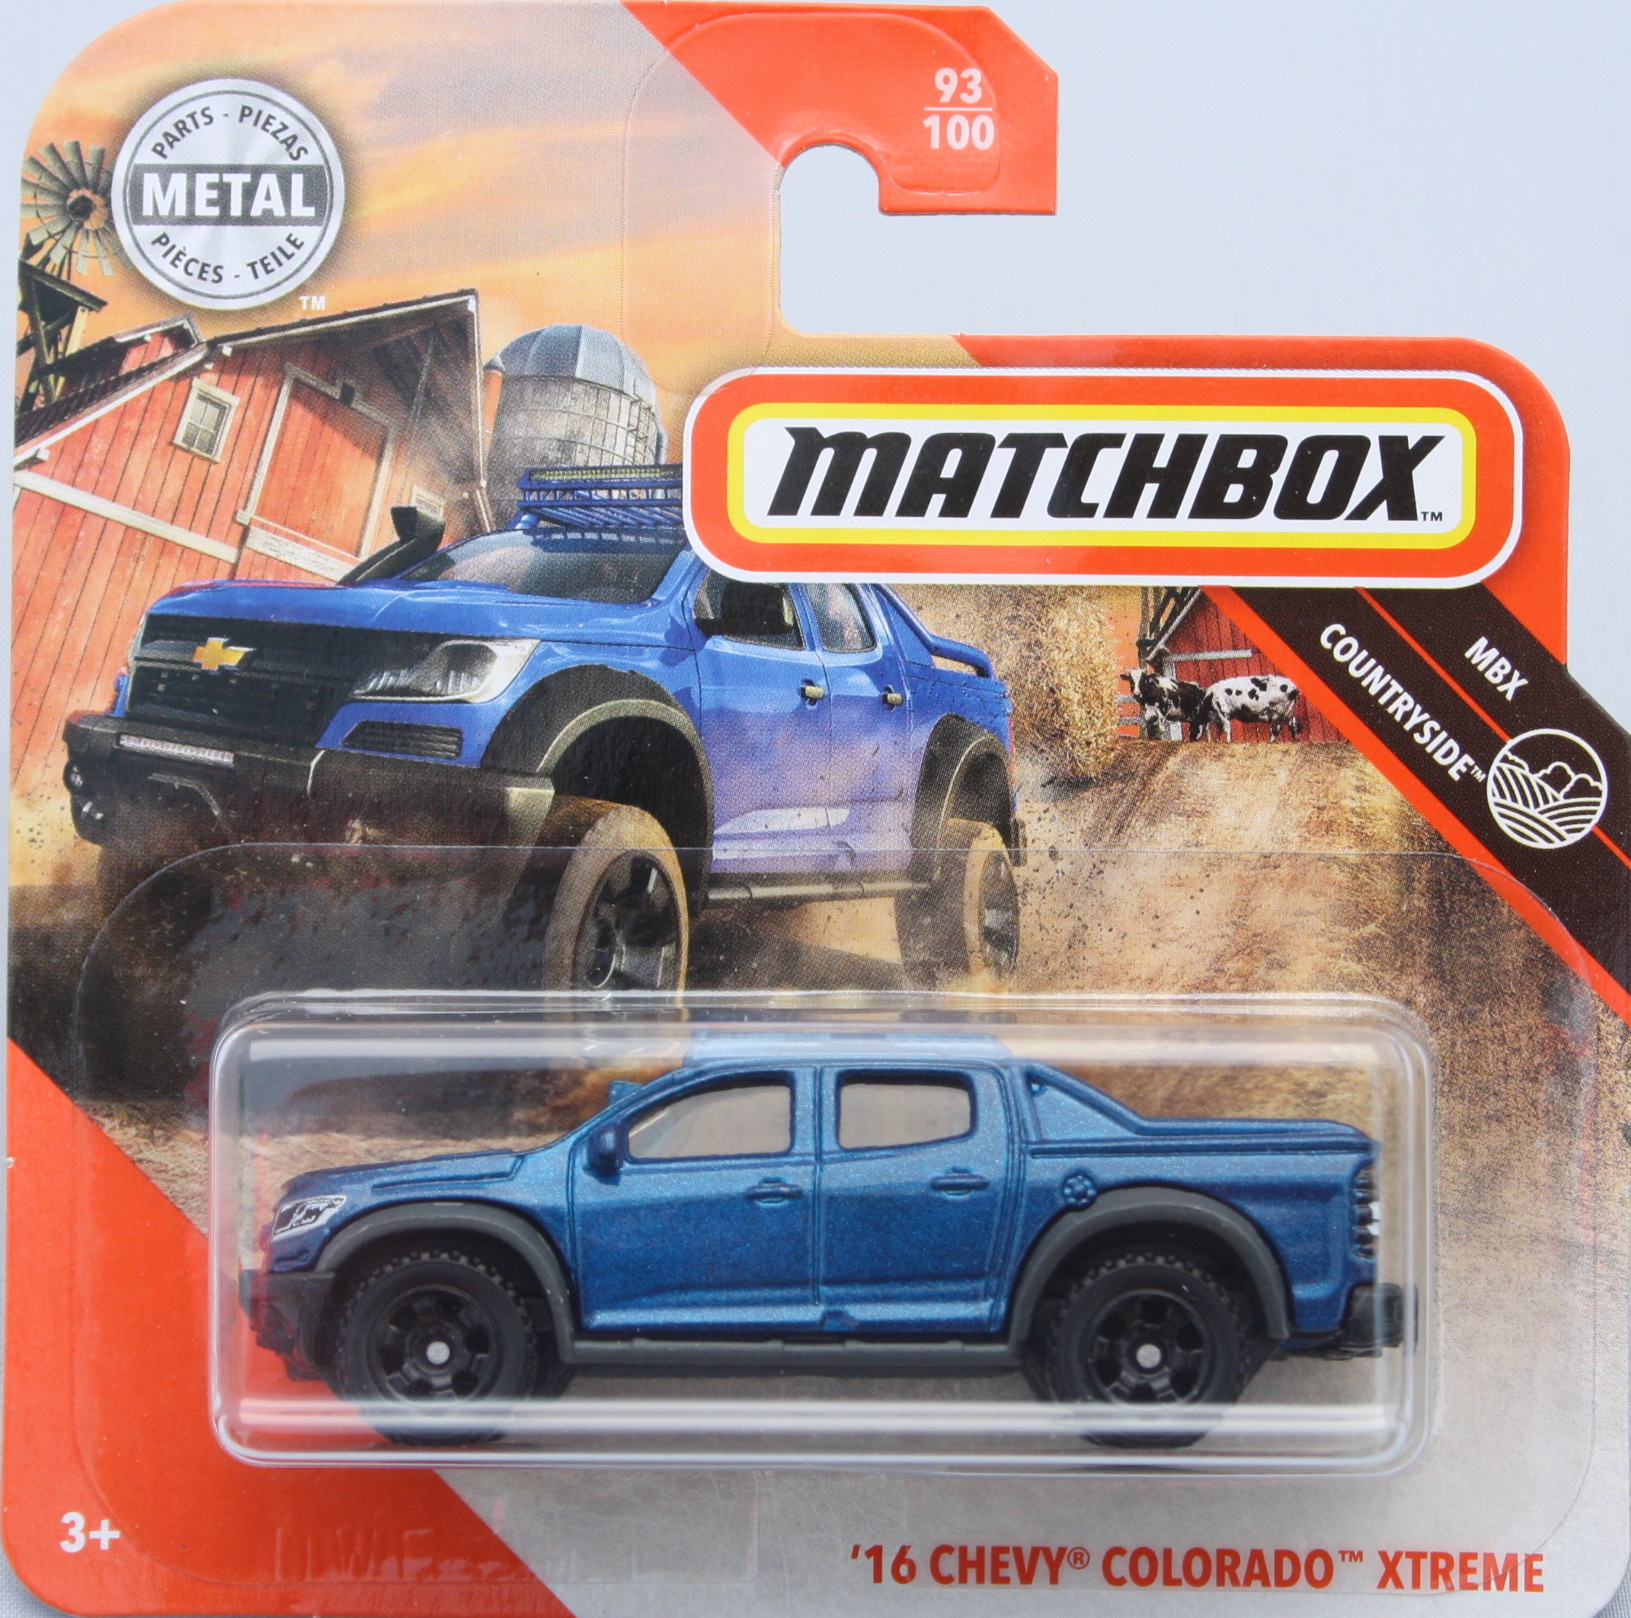 Matchbox Chevrolet 16 Colerado Xtreme - Blue 1:64